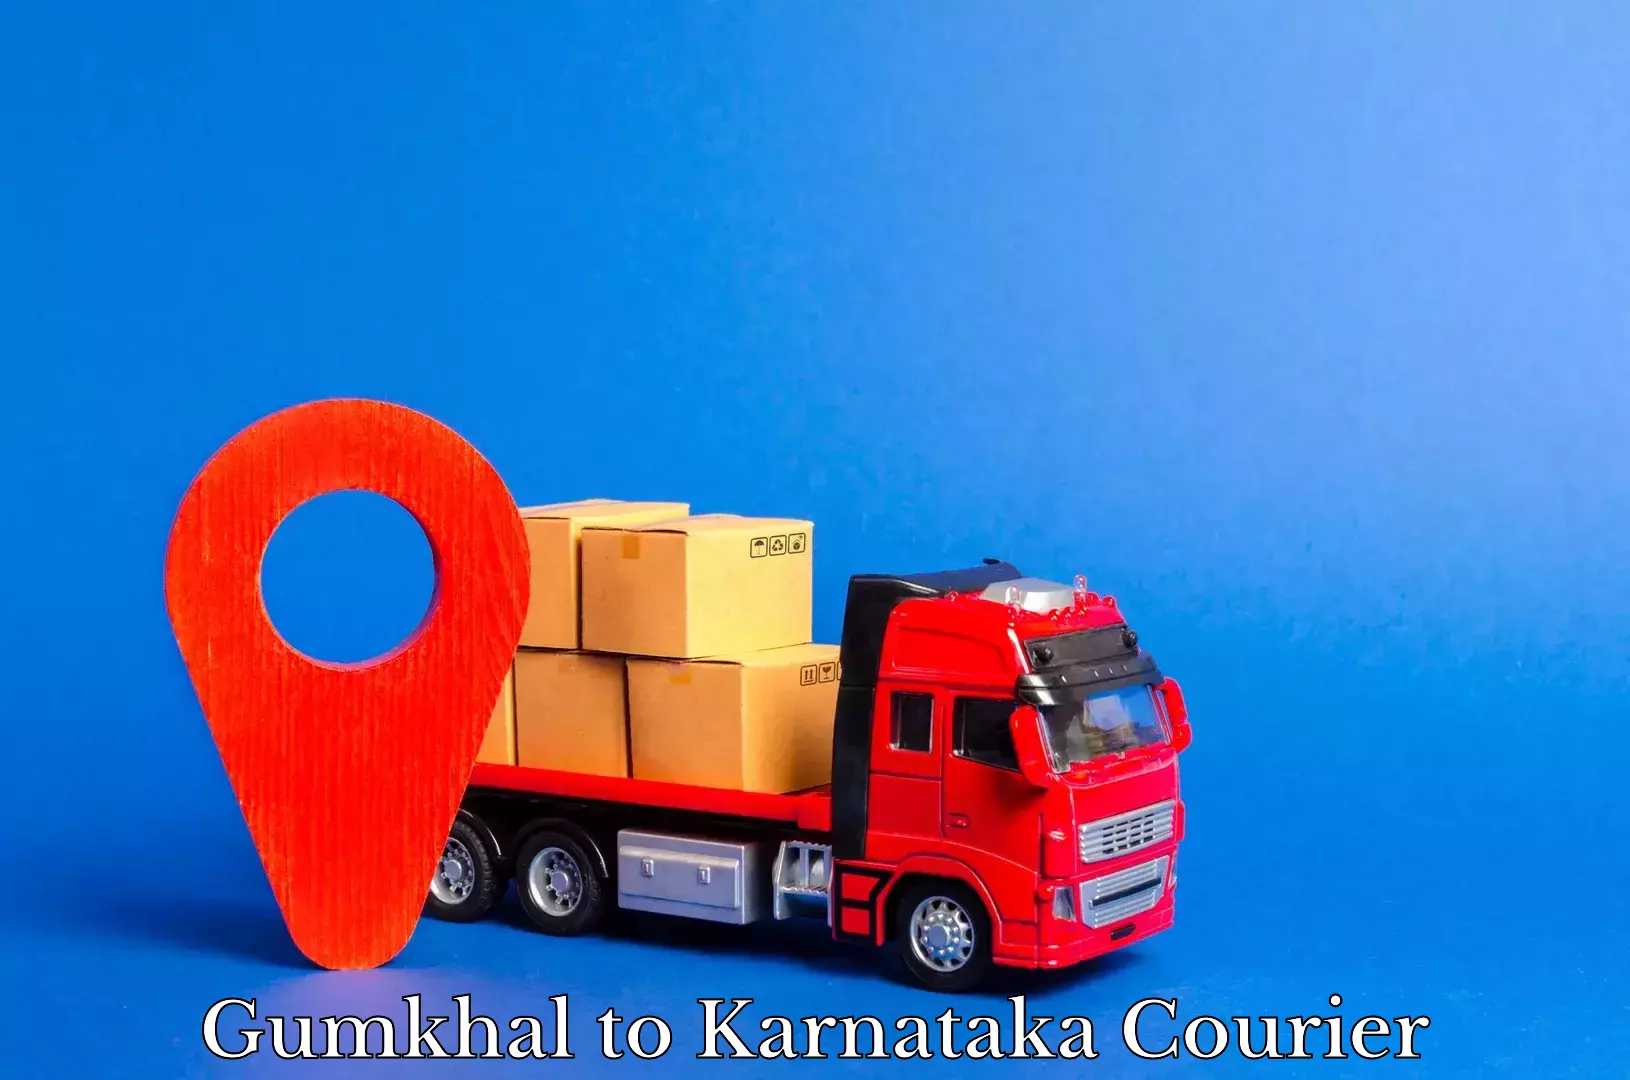 Nationwide courier service Gumkhal to Karnataka